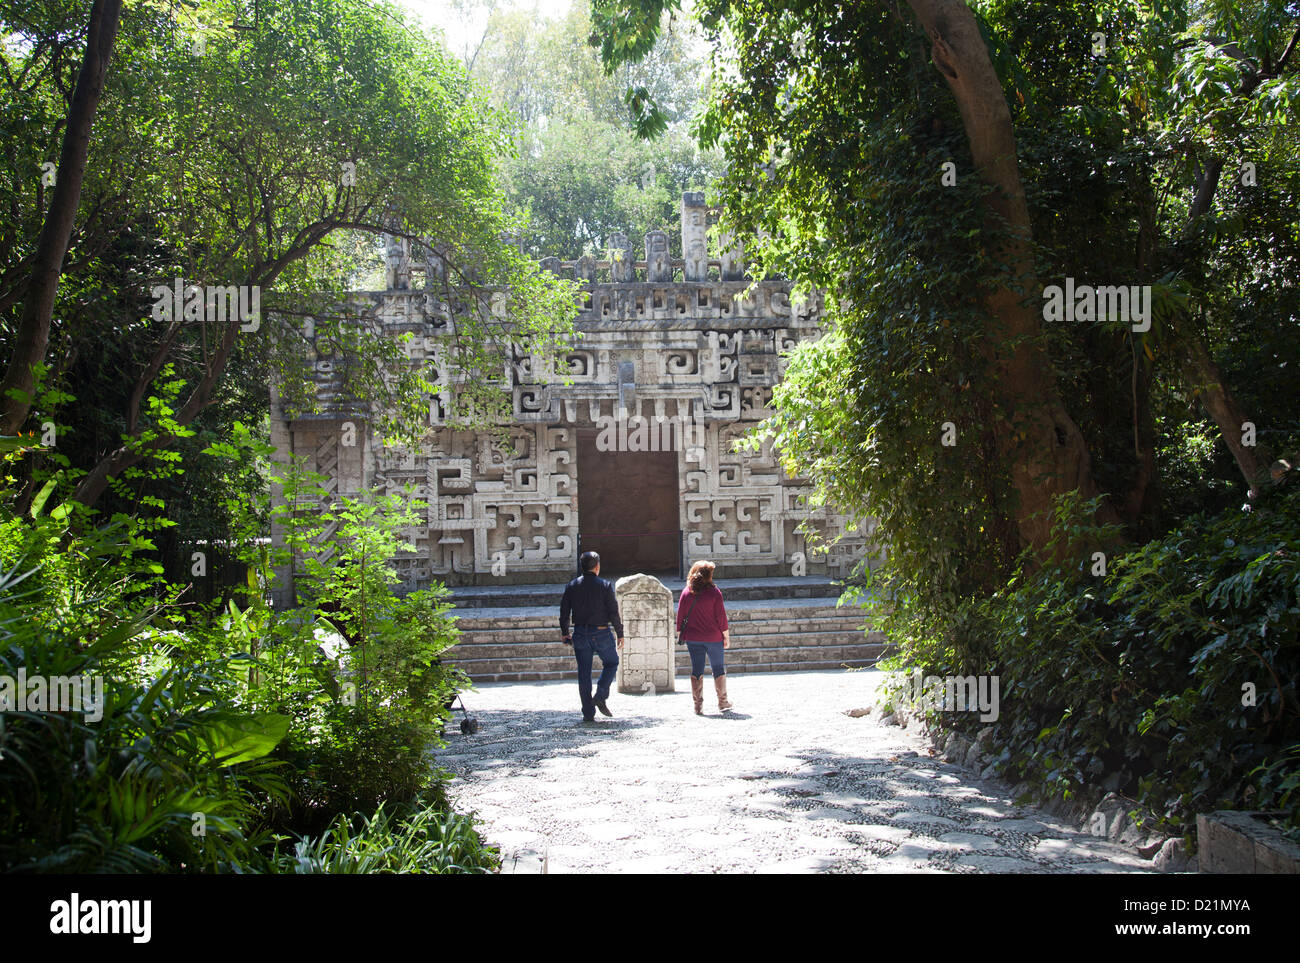 Museo Nacional De Antrolopogia in Mexiko-Stadt DF - Maya-Tempel Relica in Gärten Stockfoto